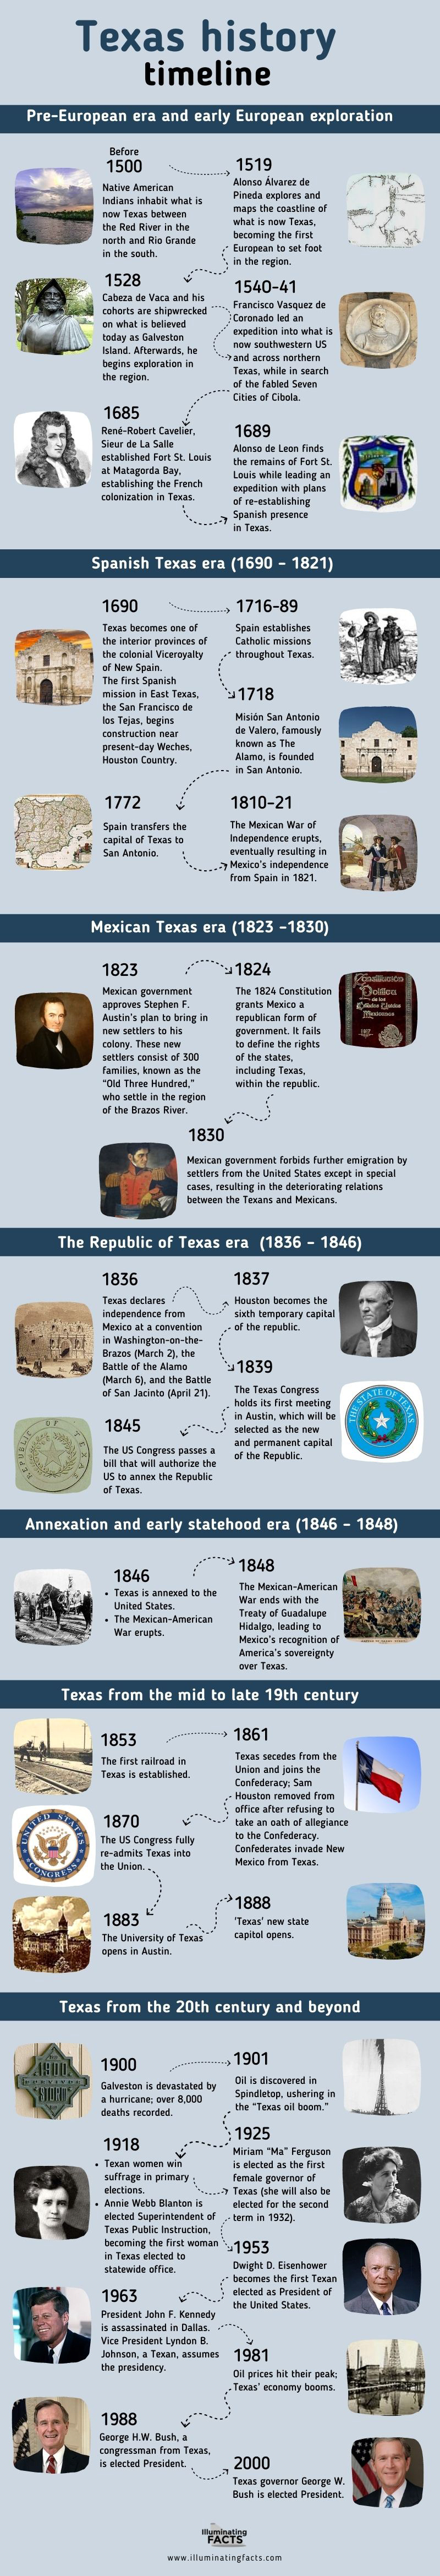 Texas history timeline